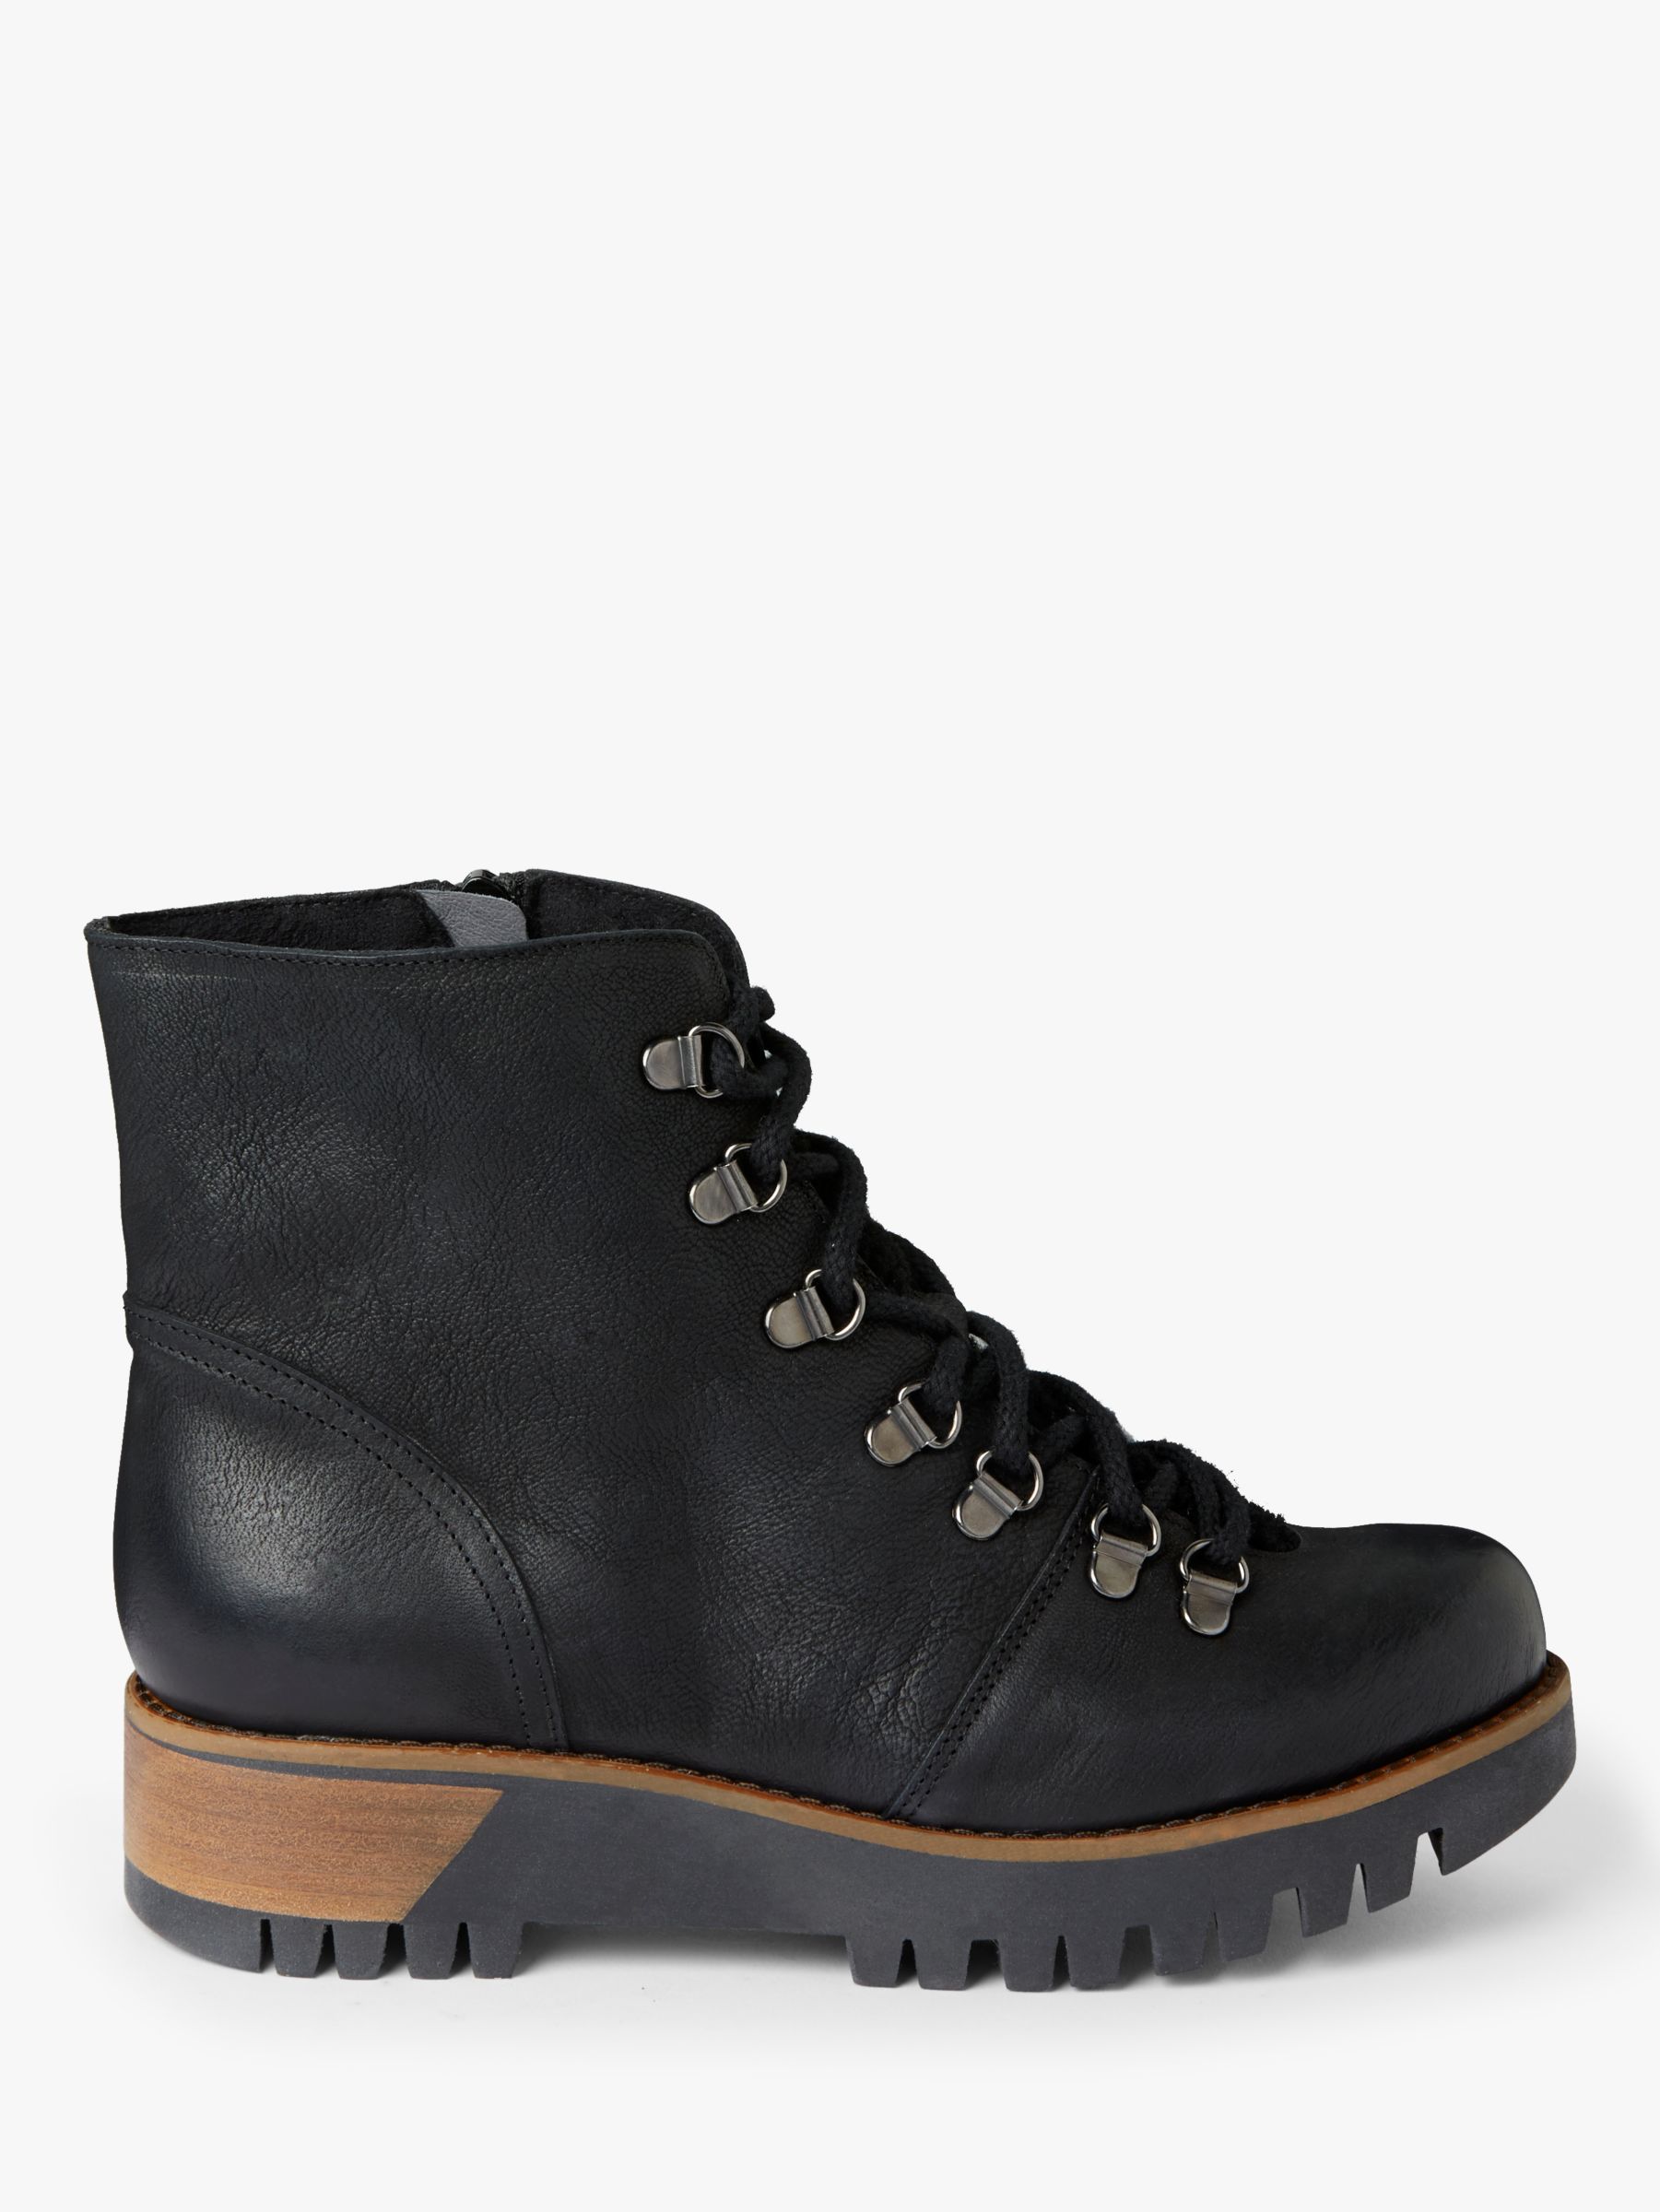 John Lewis & Partners Presley Leather Hiker Boots, Black